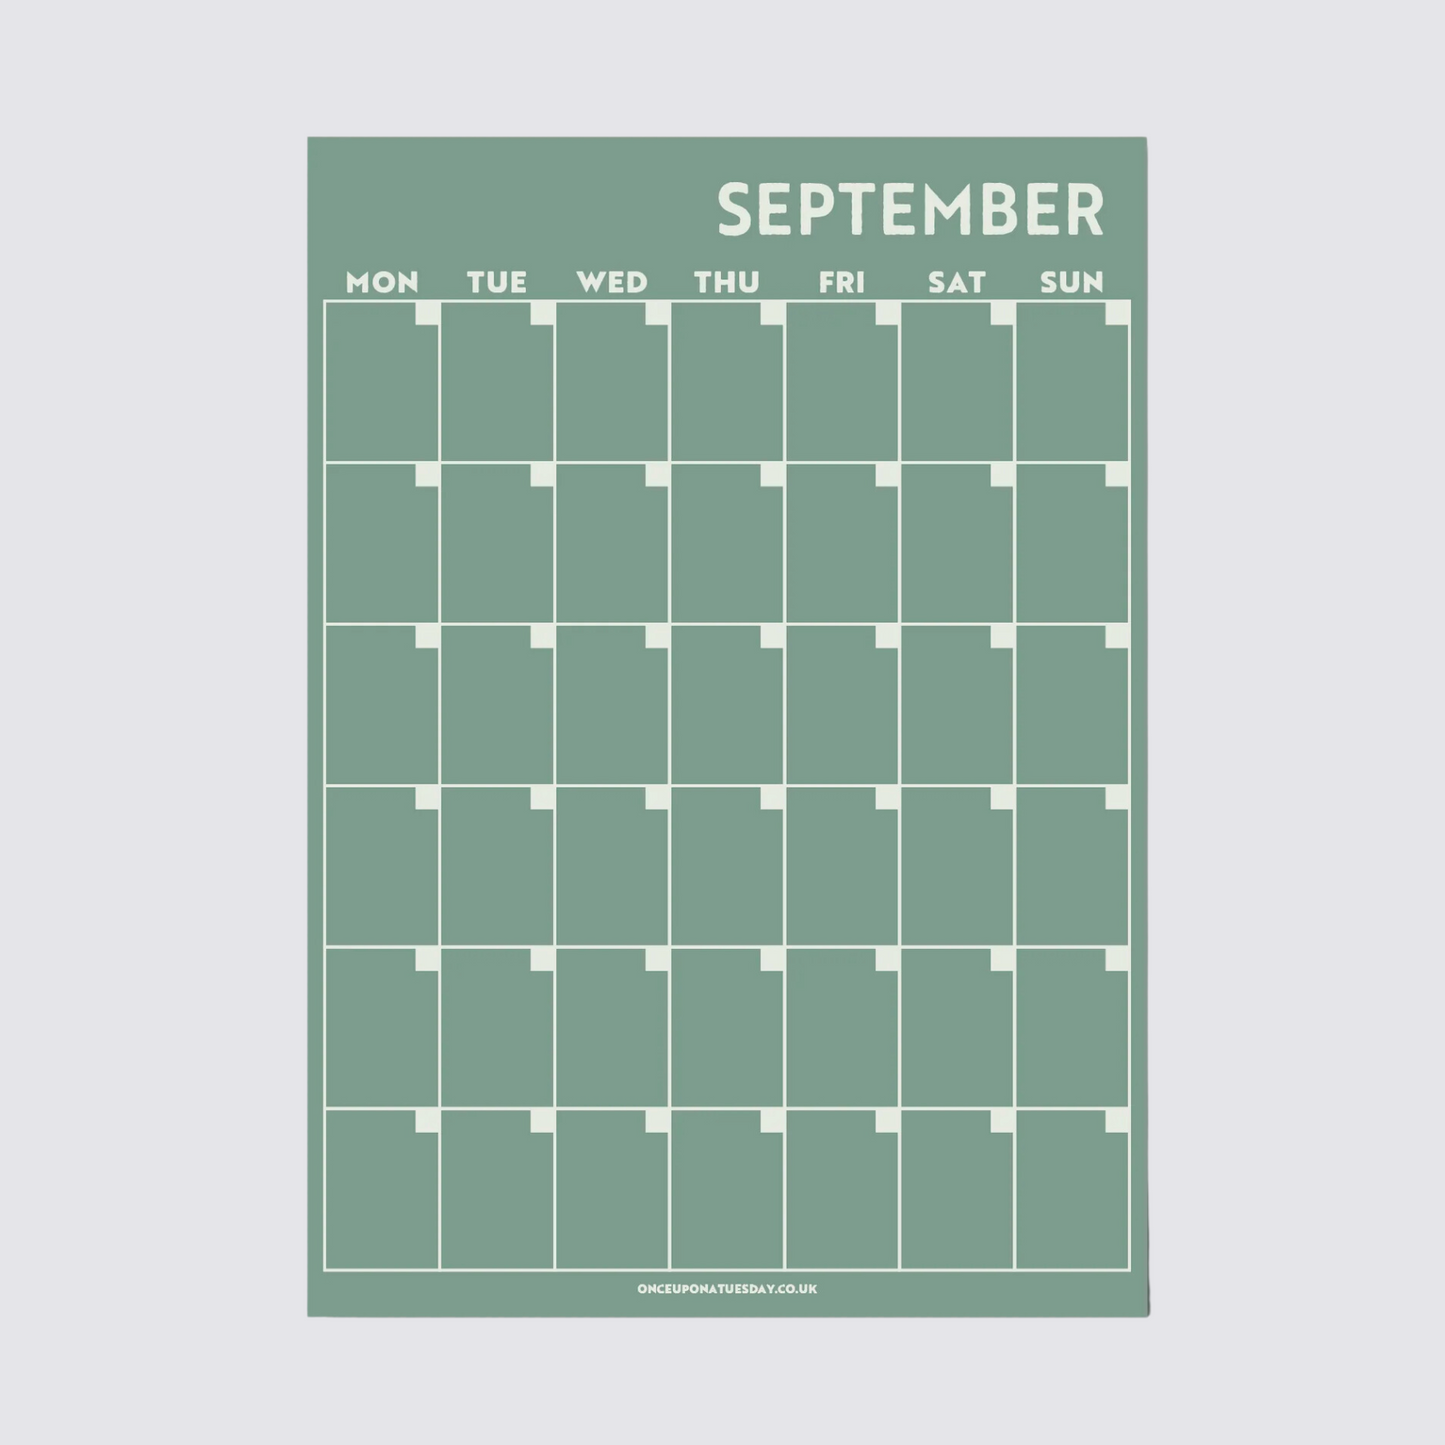 Monthly calendar wall planner